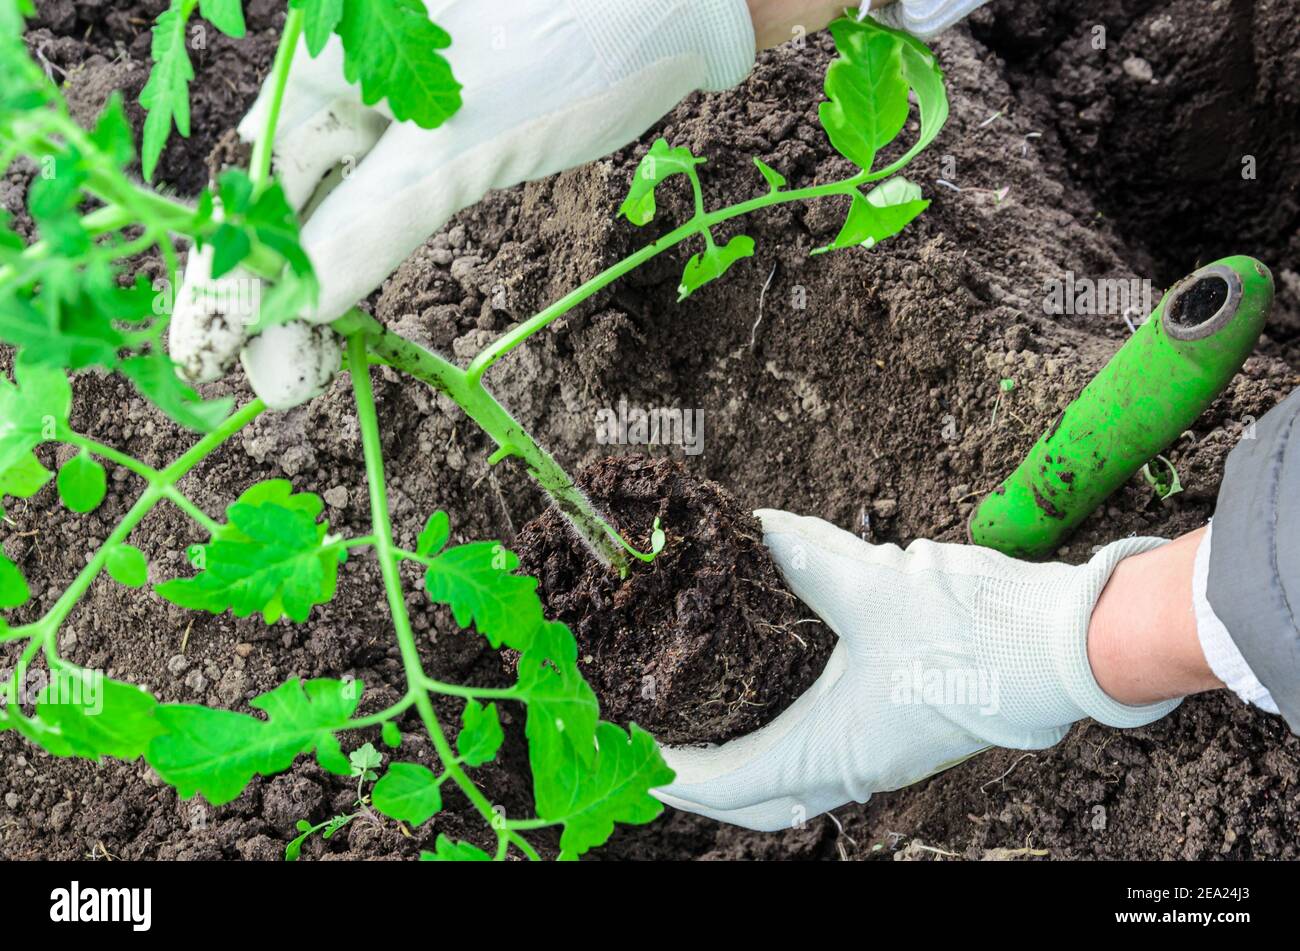 A female farmer plants tomato seedlings in an organic garden Stock Photo